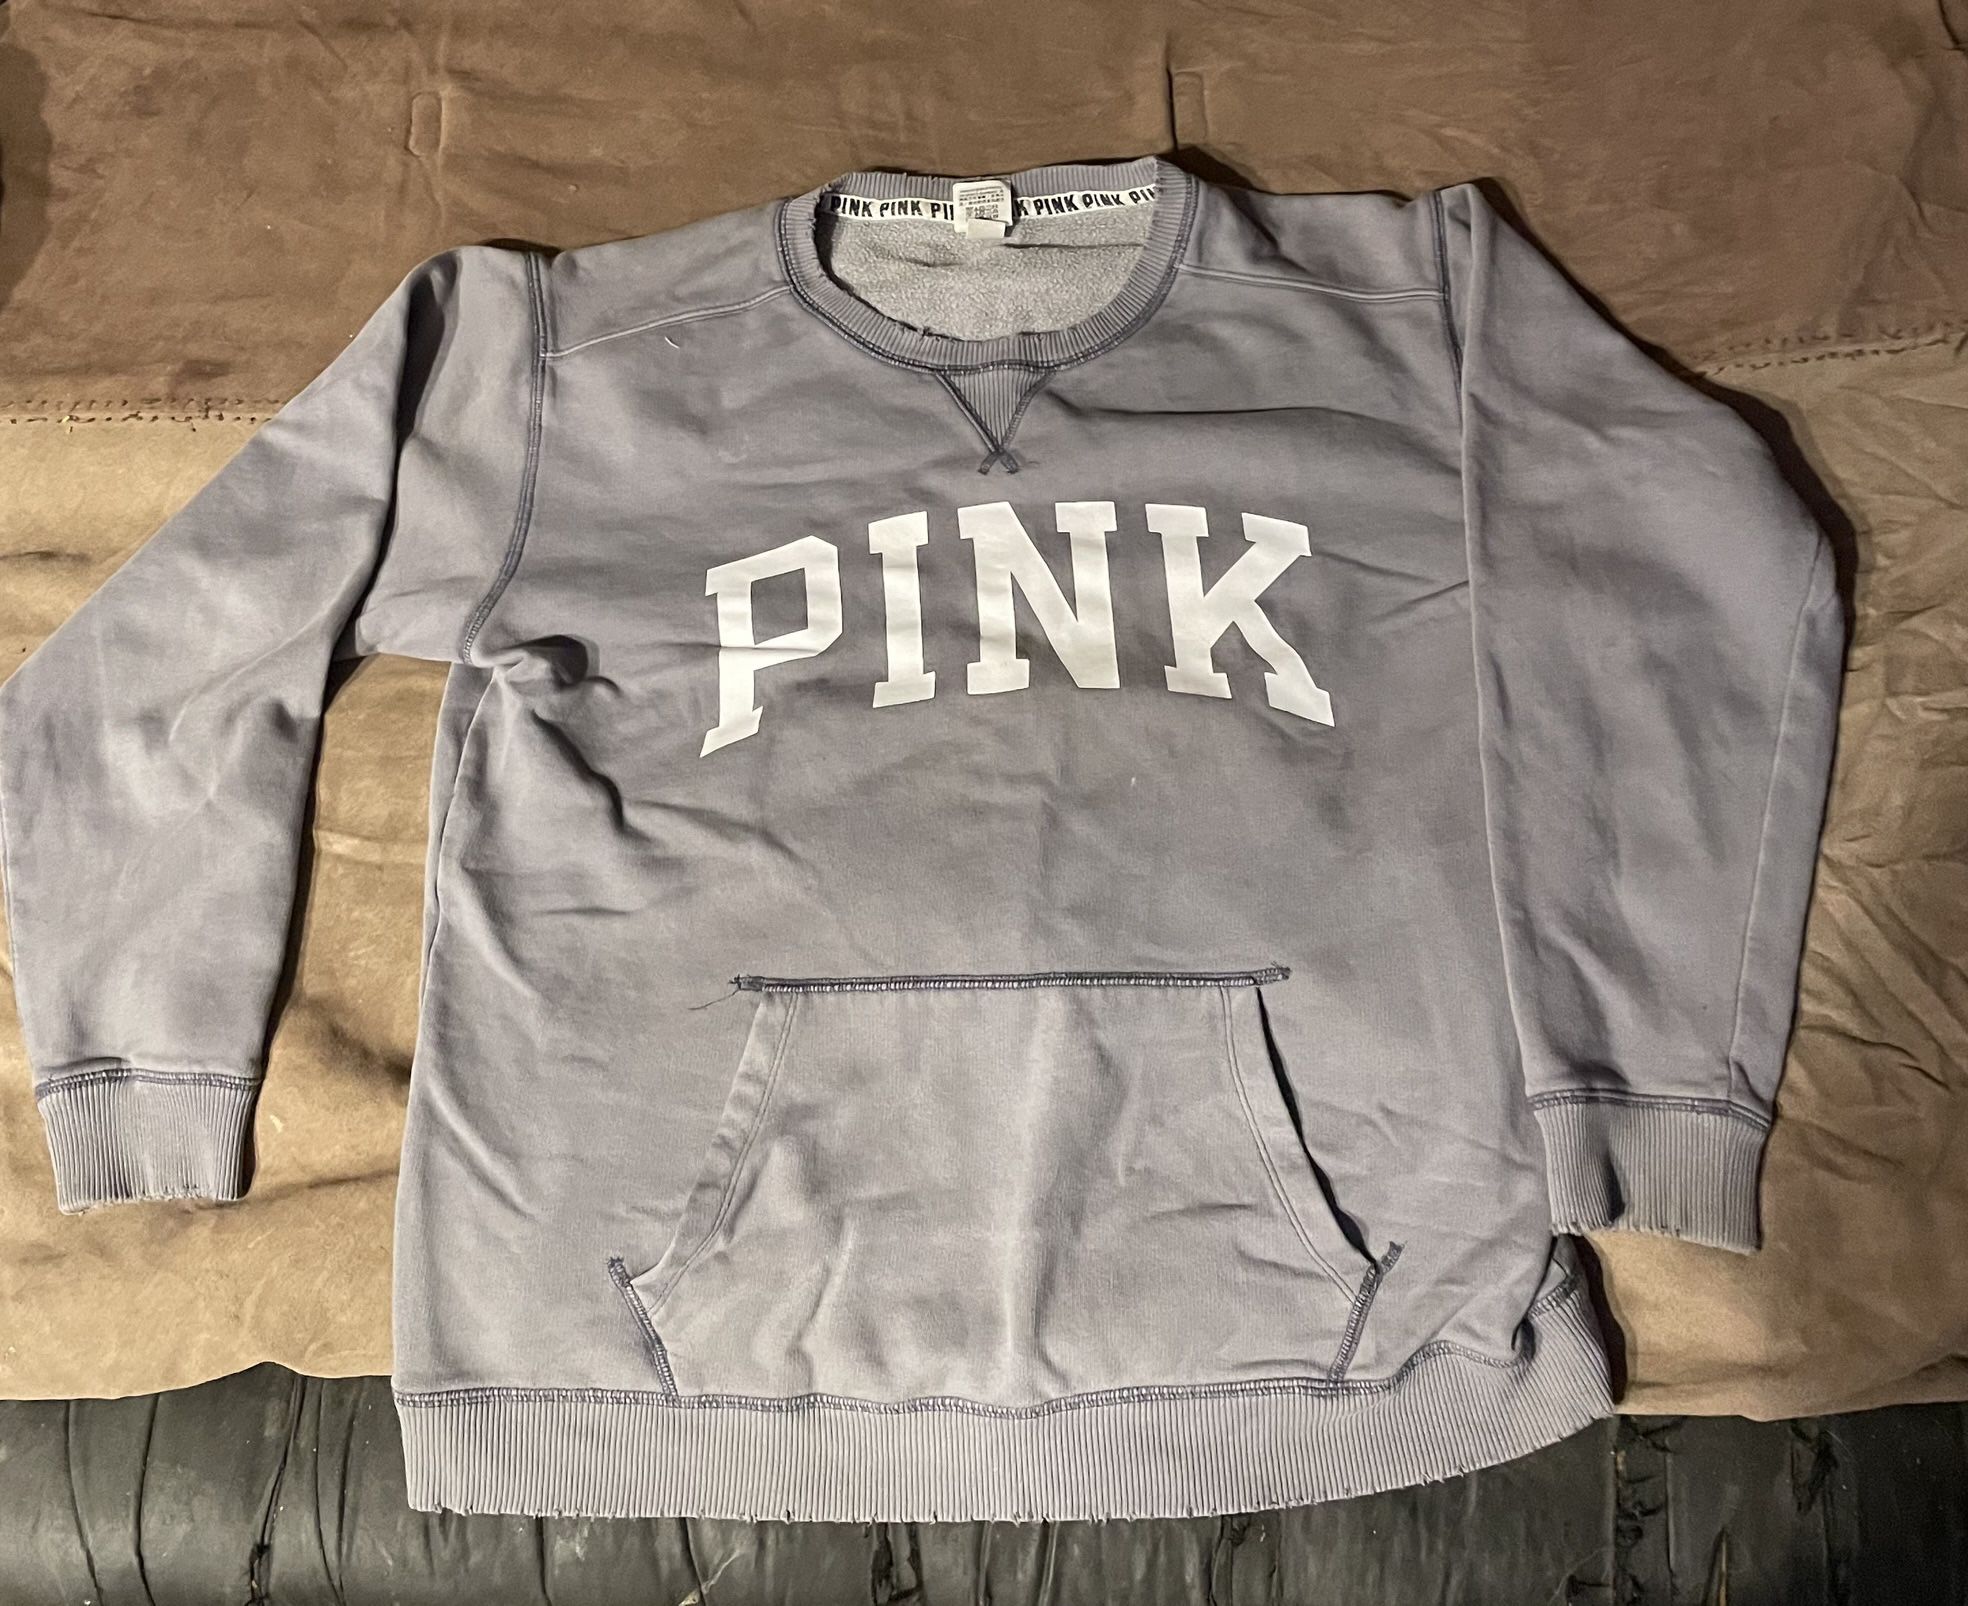 Girls/Women’s Pink Sweatshirts